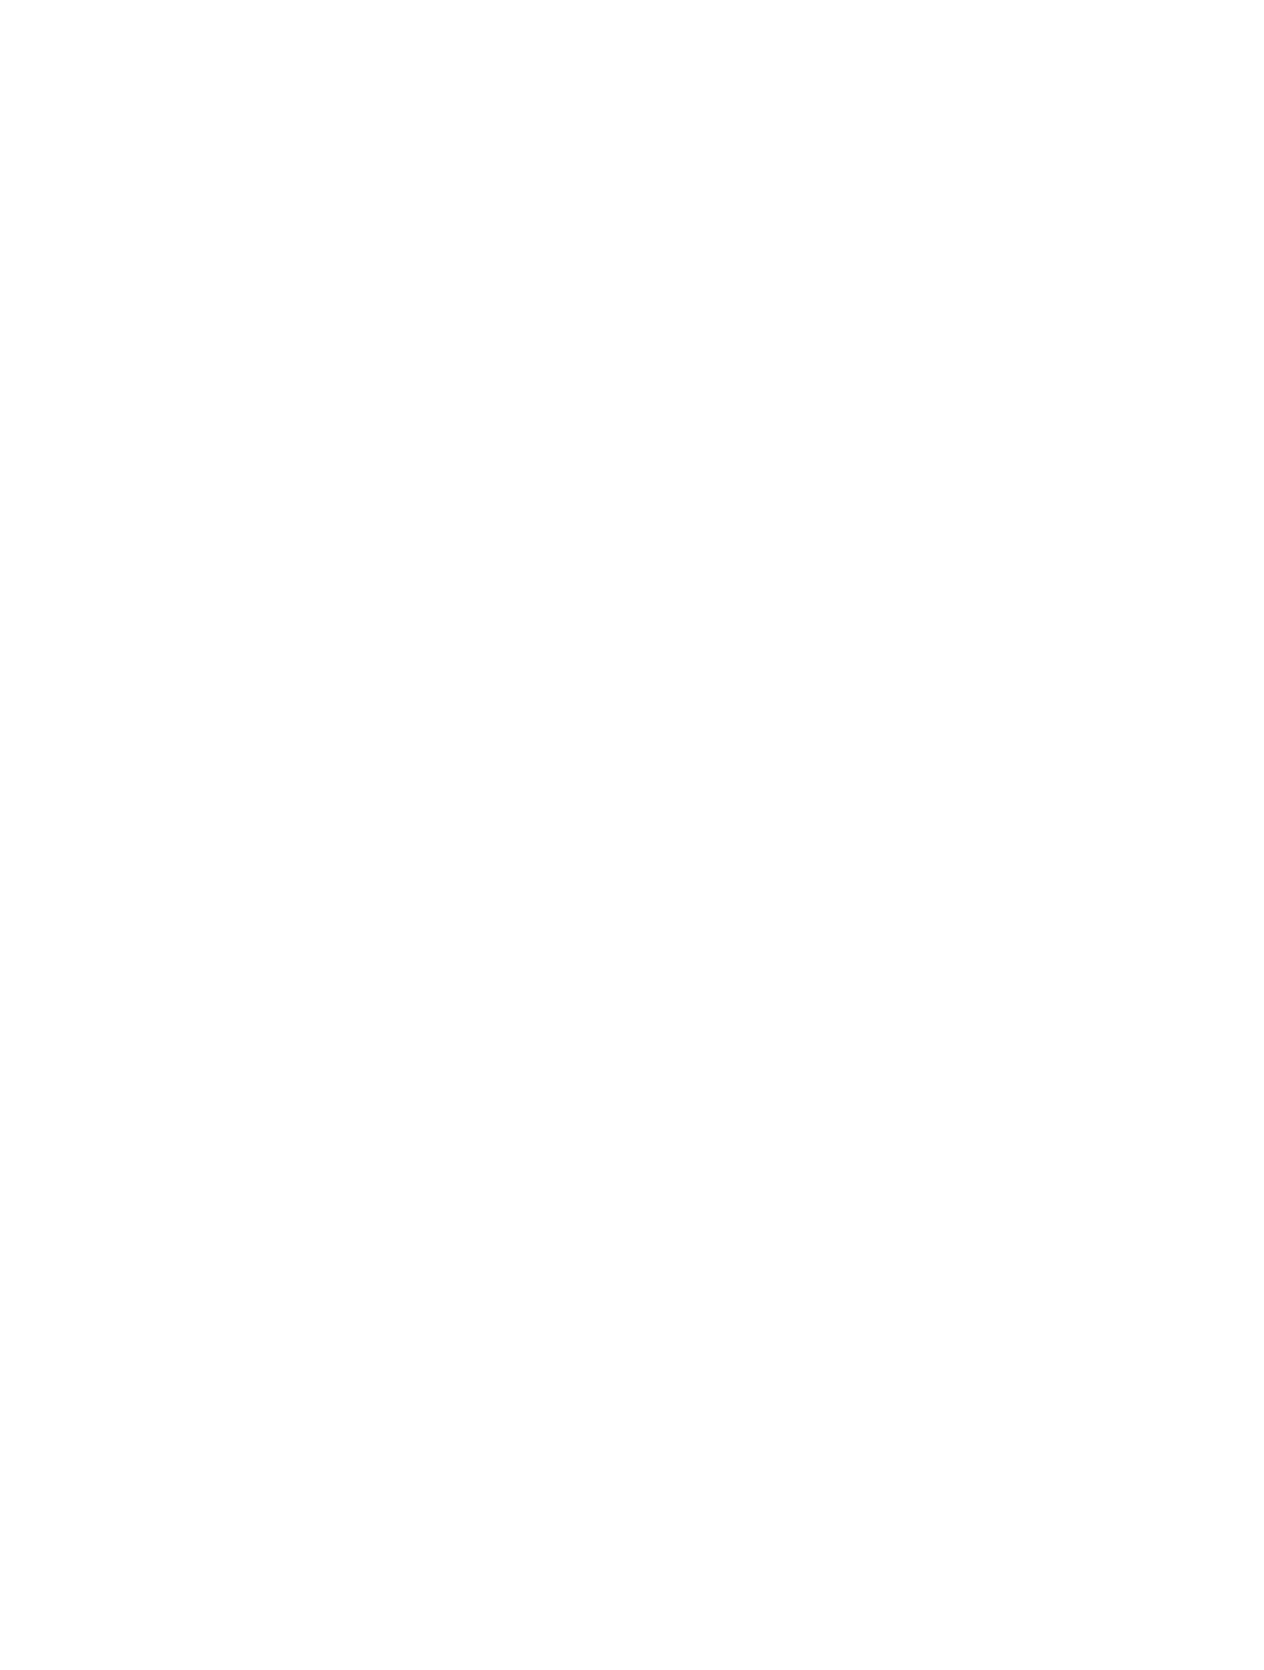 Jacobs Engineering logo for dark backgrounds (transparent PNG)